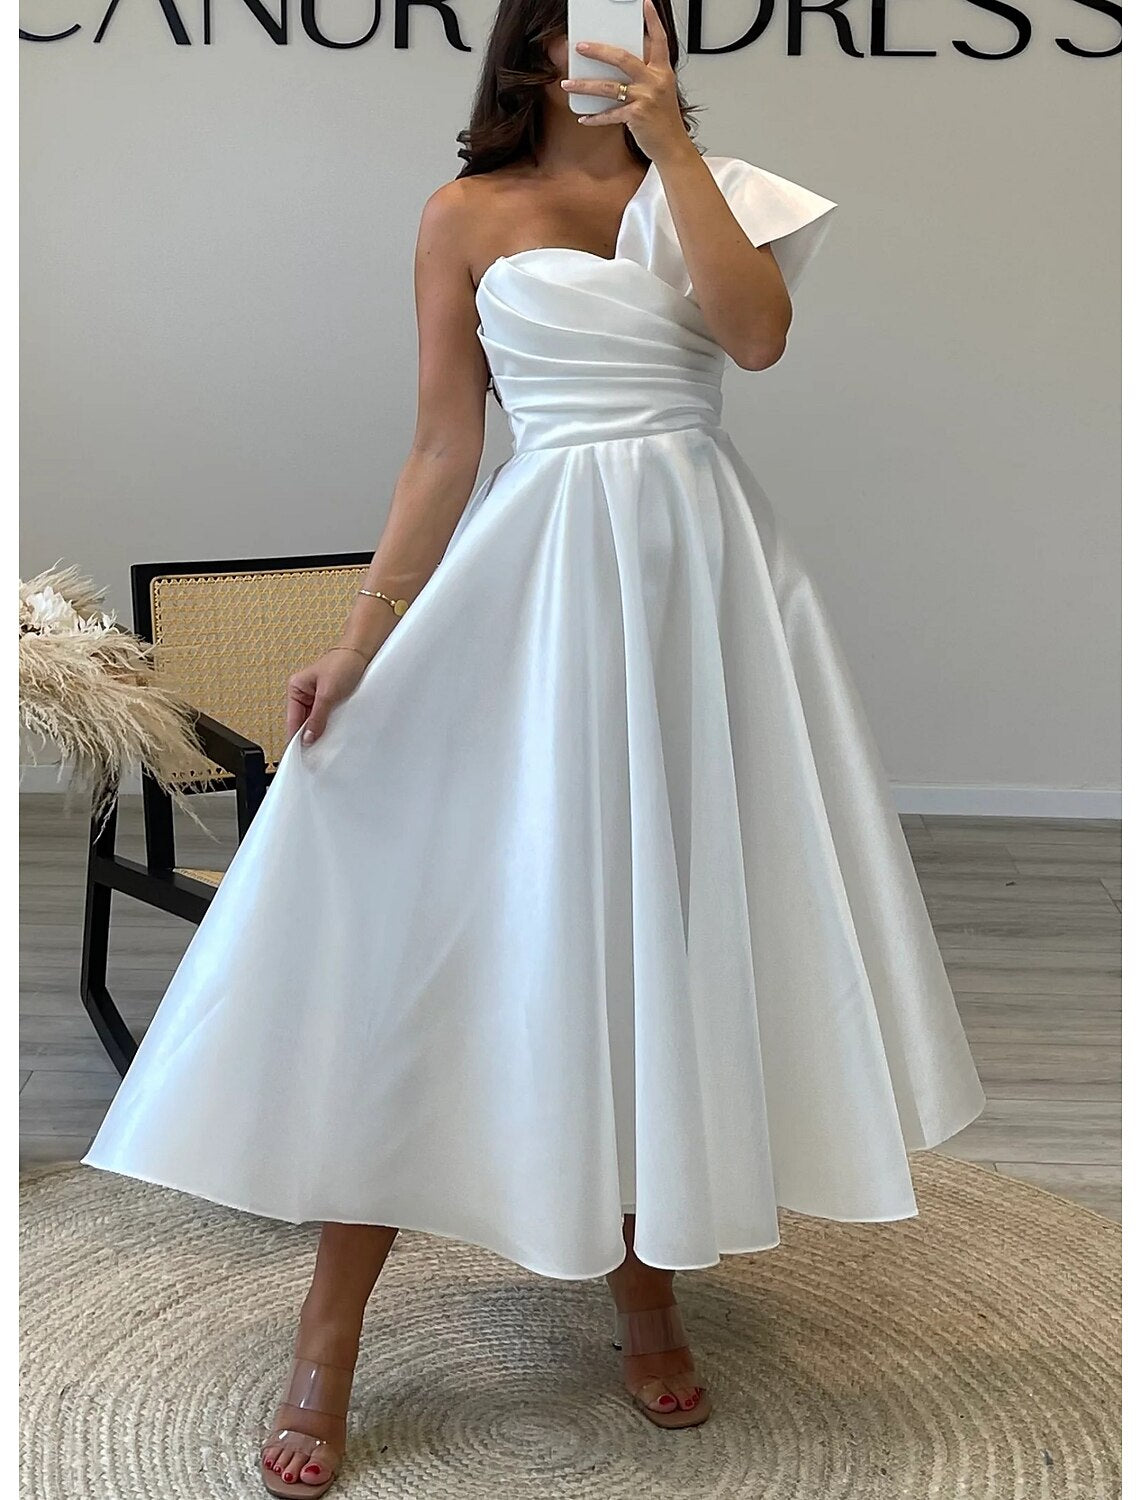 A-Line Cocktail Dresses Elegant Dress Formal Prom Ankle Length 3/4 Length Sleeve One Shoulder Satin with Ruched